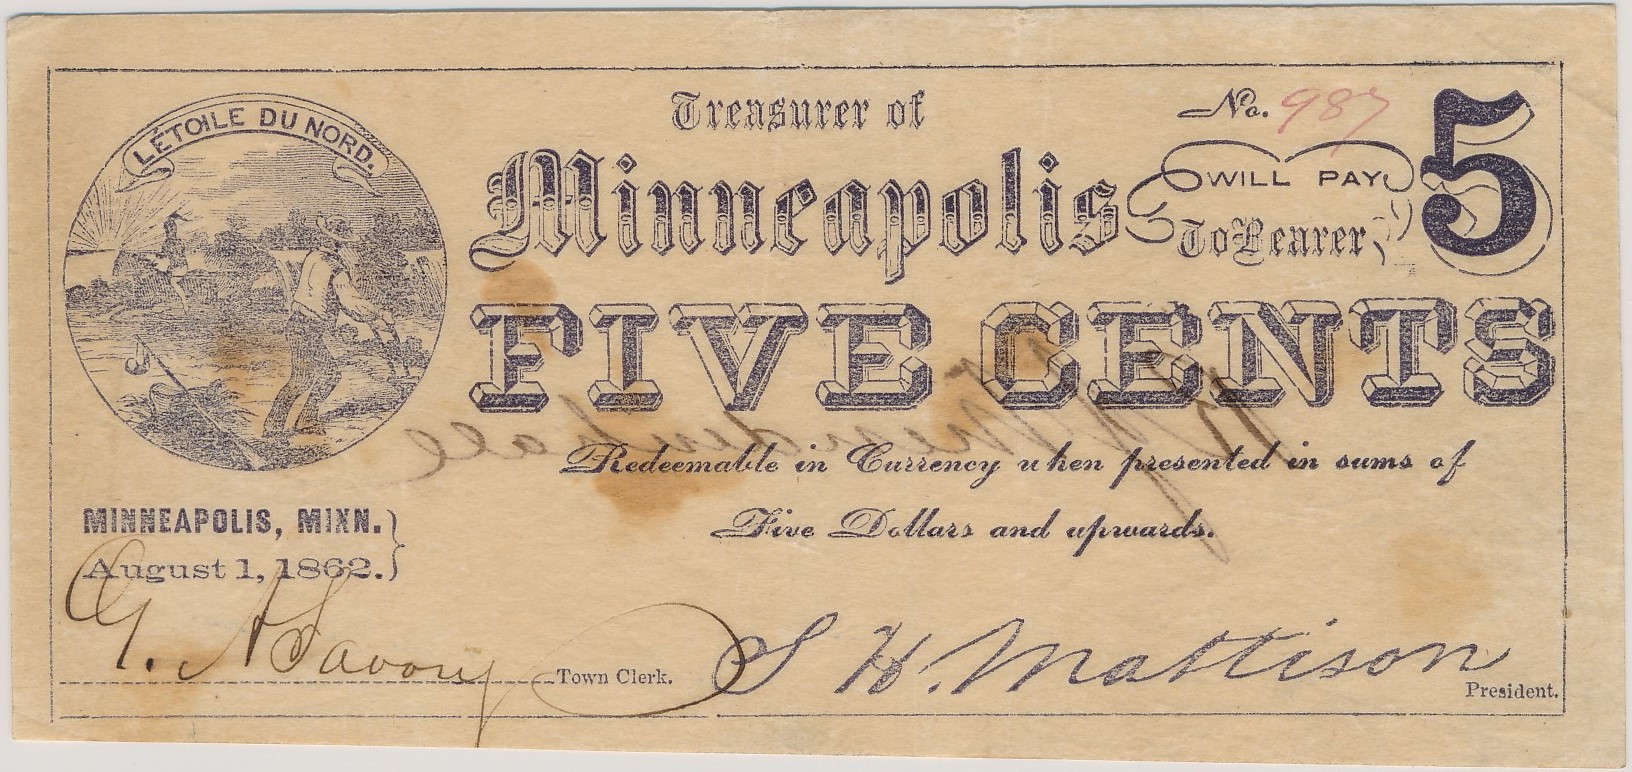 $.05 Treasurer of Minneapolis